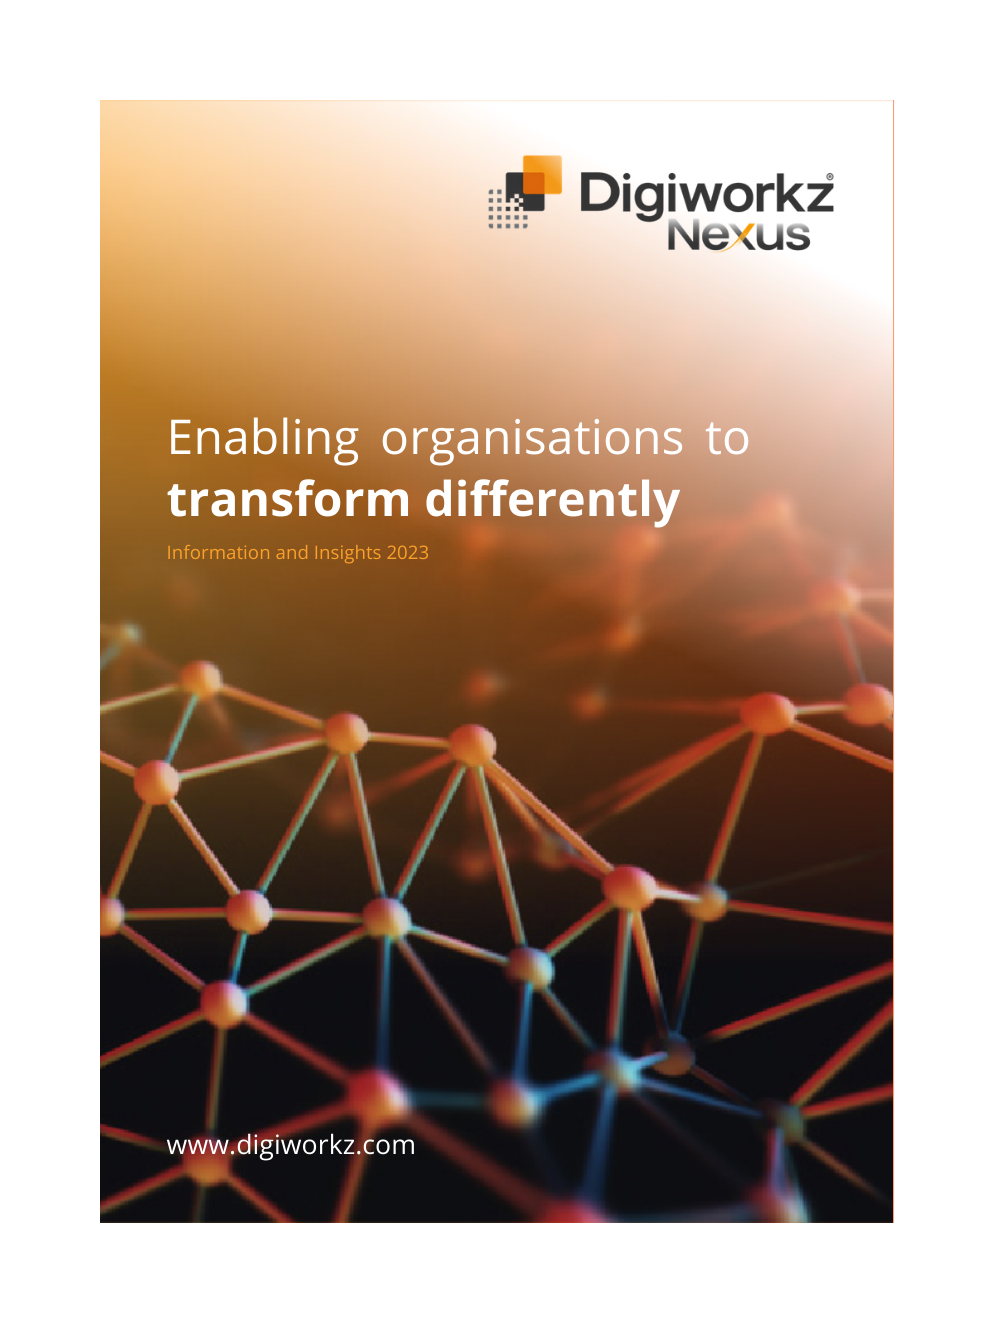 Digiworkz Nexus - Information and Insights brochure (1).pdf (1)